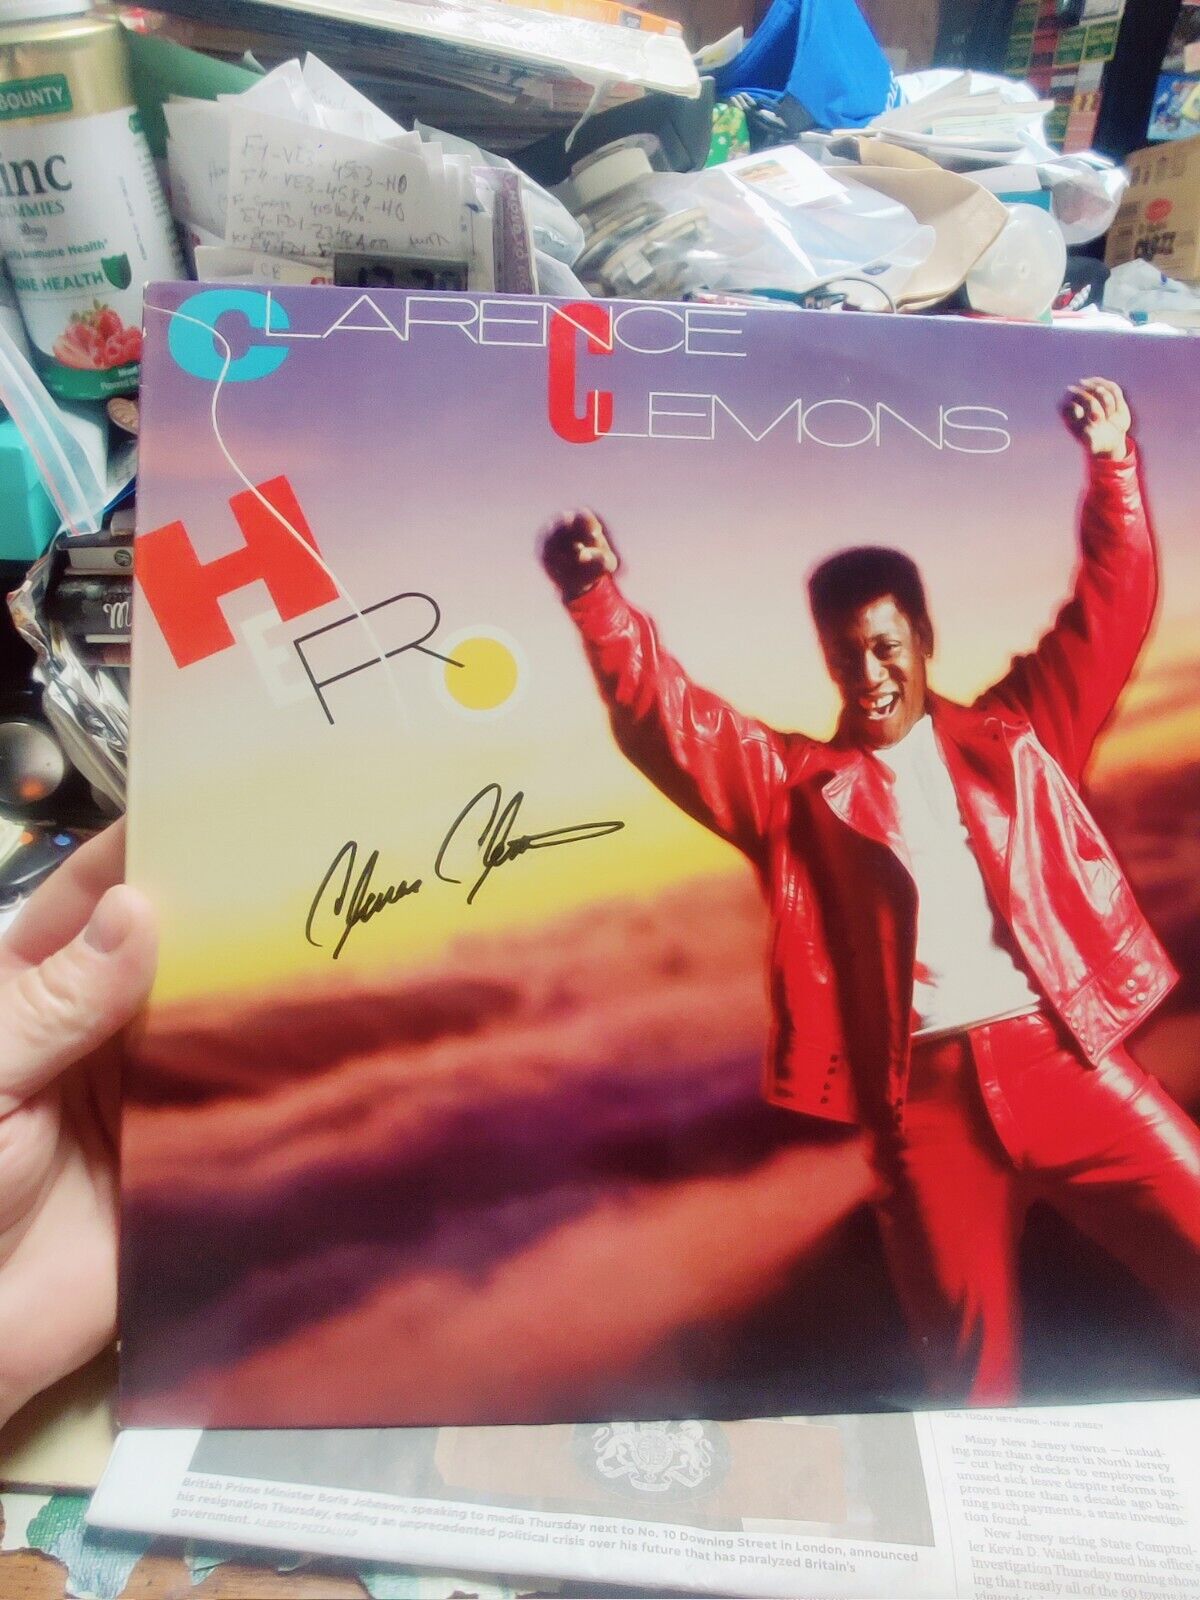 Clarence clemons signed Hero Album